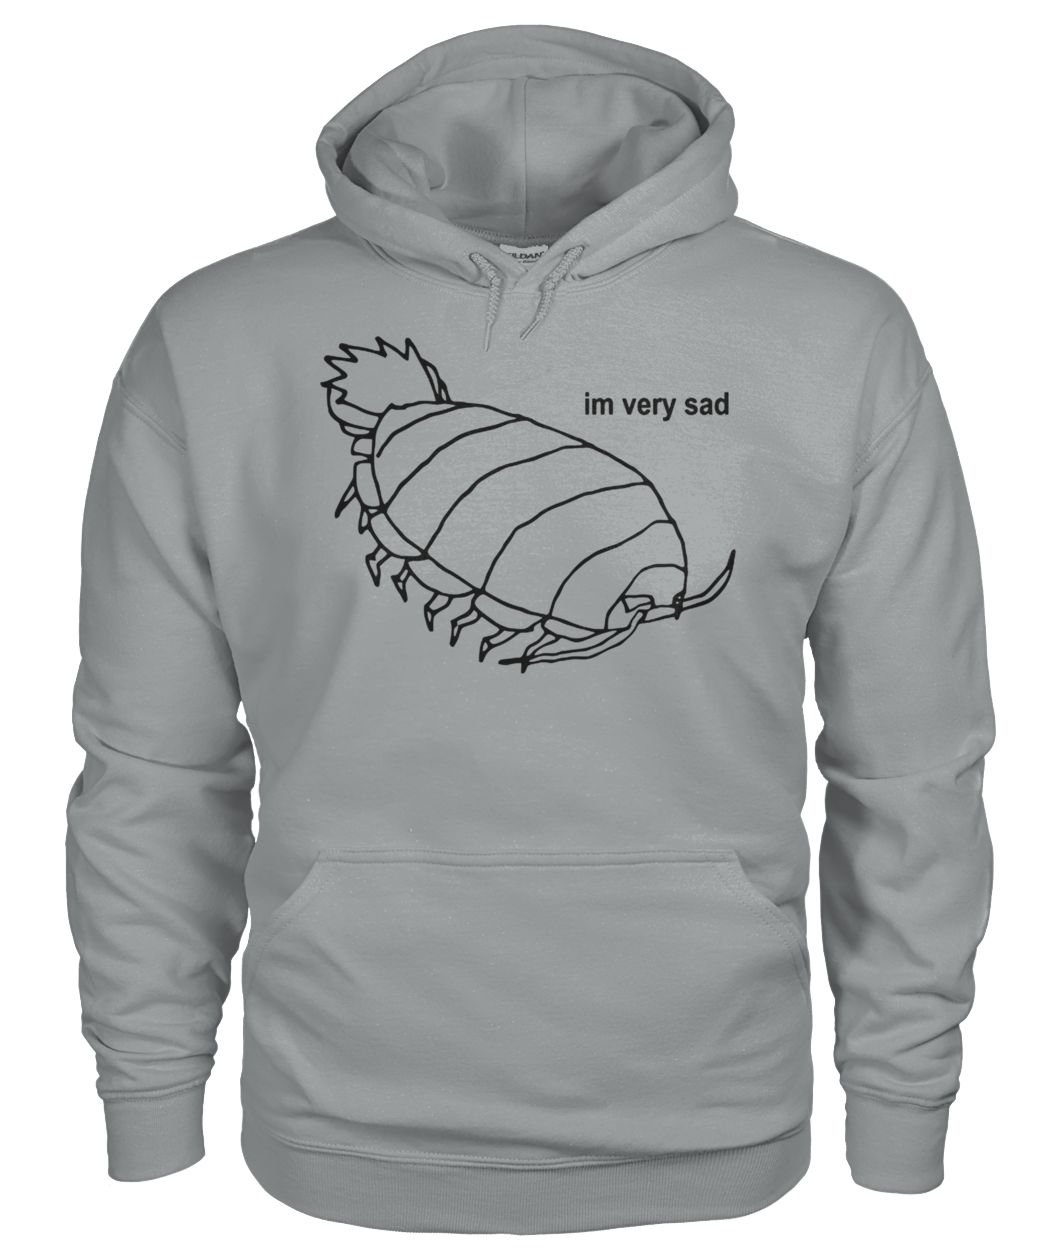 Isopod I'm very sad gildan hoodie